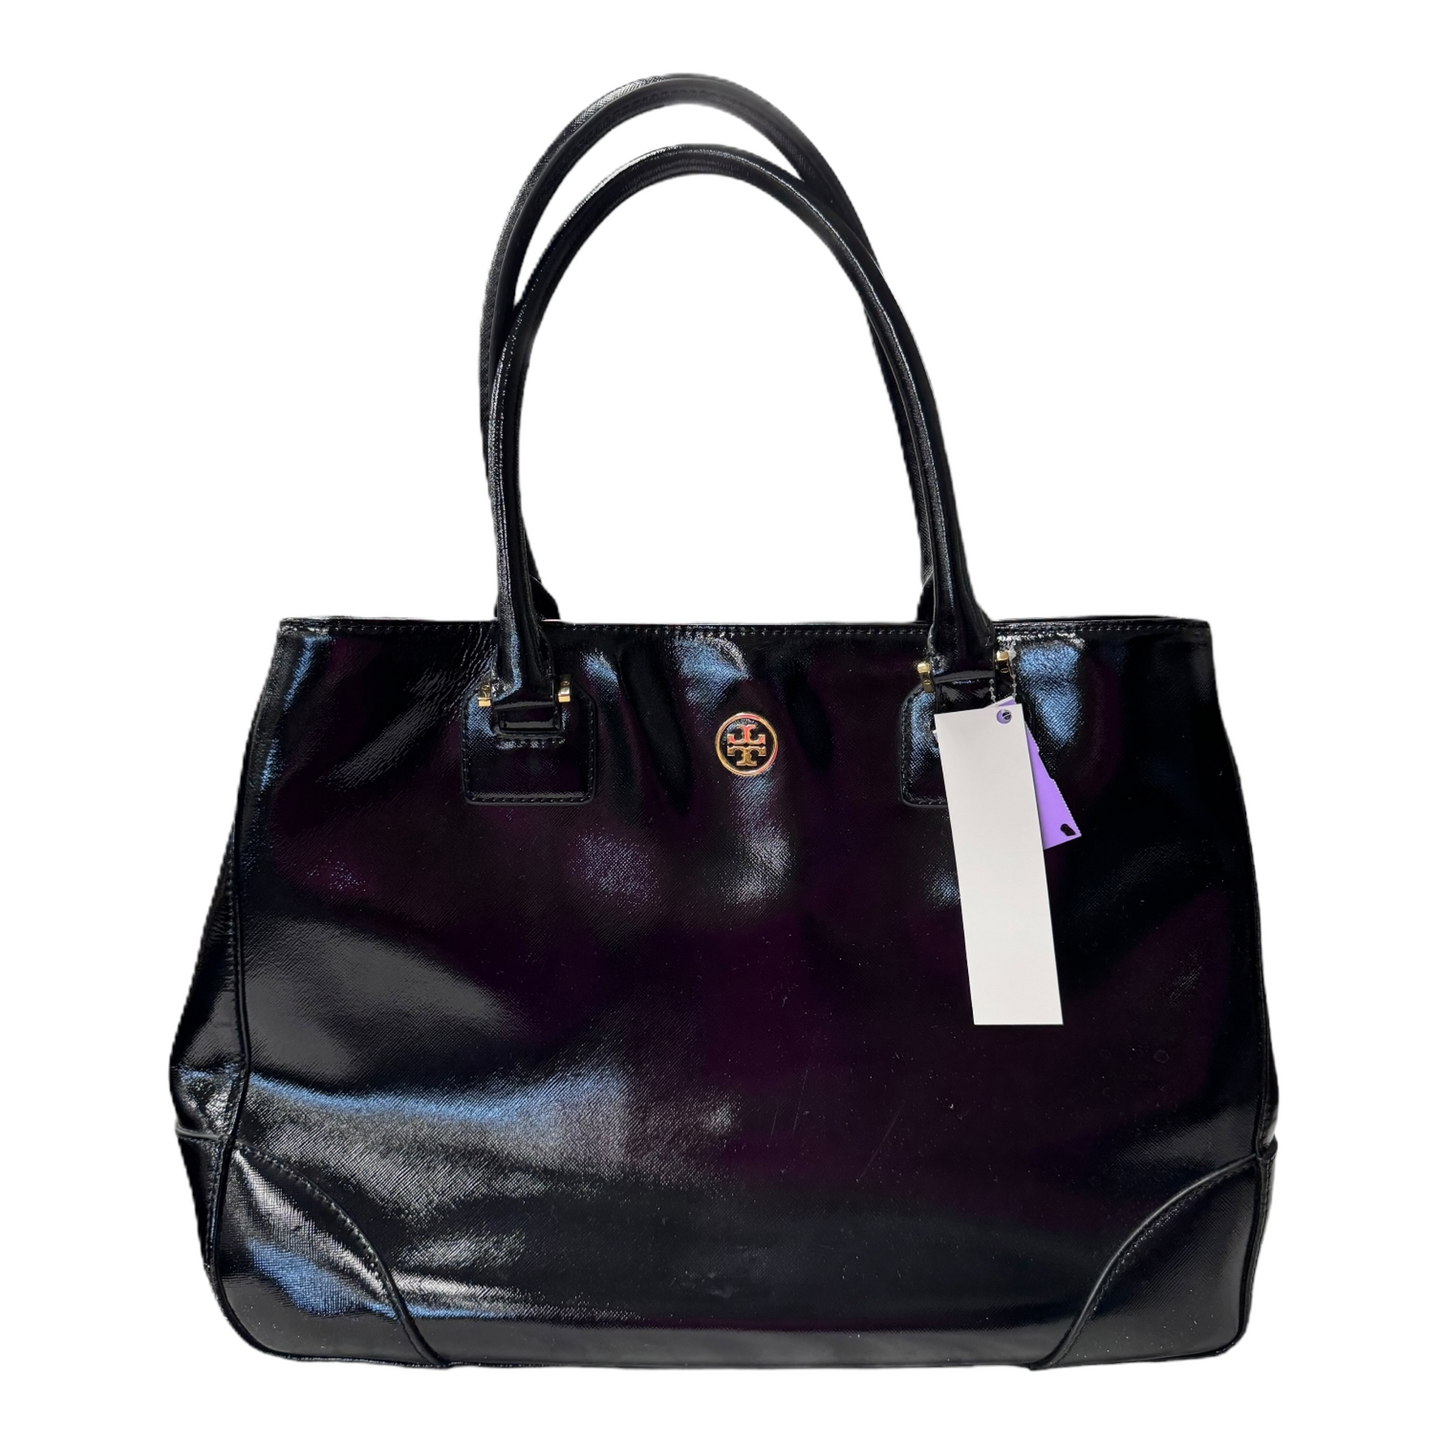 Handbag Designer By Tory Burch, Size: Large